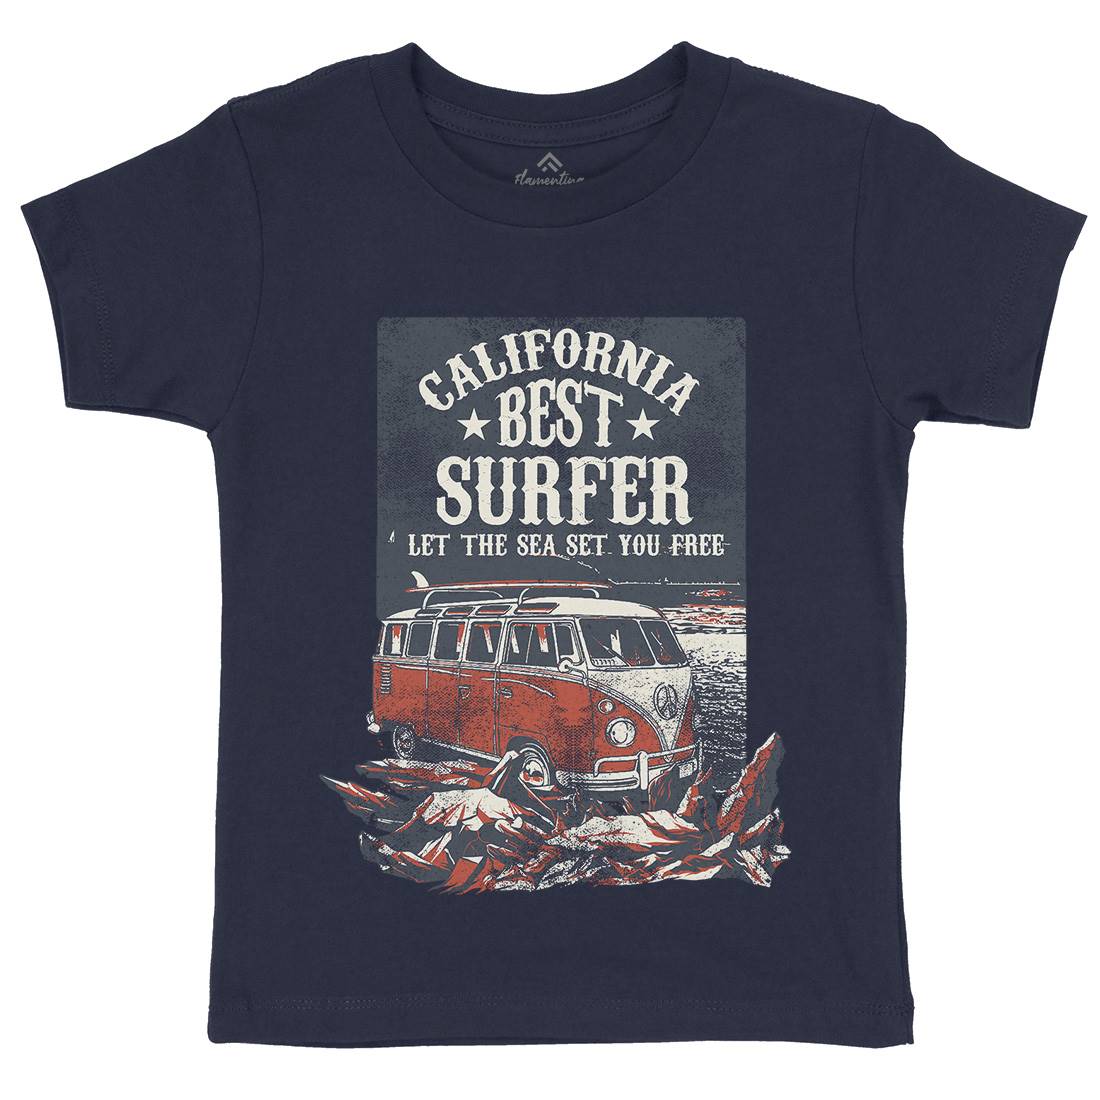 Let The Sea Set You Free Kids Organic Crew Neck T-Shirt Surf C956